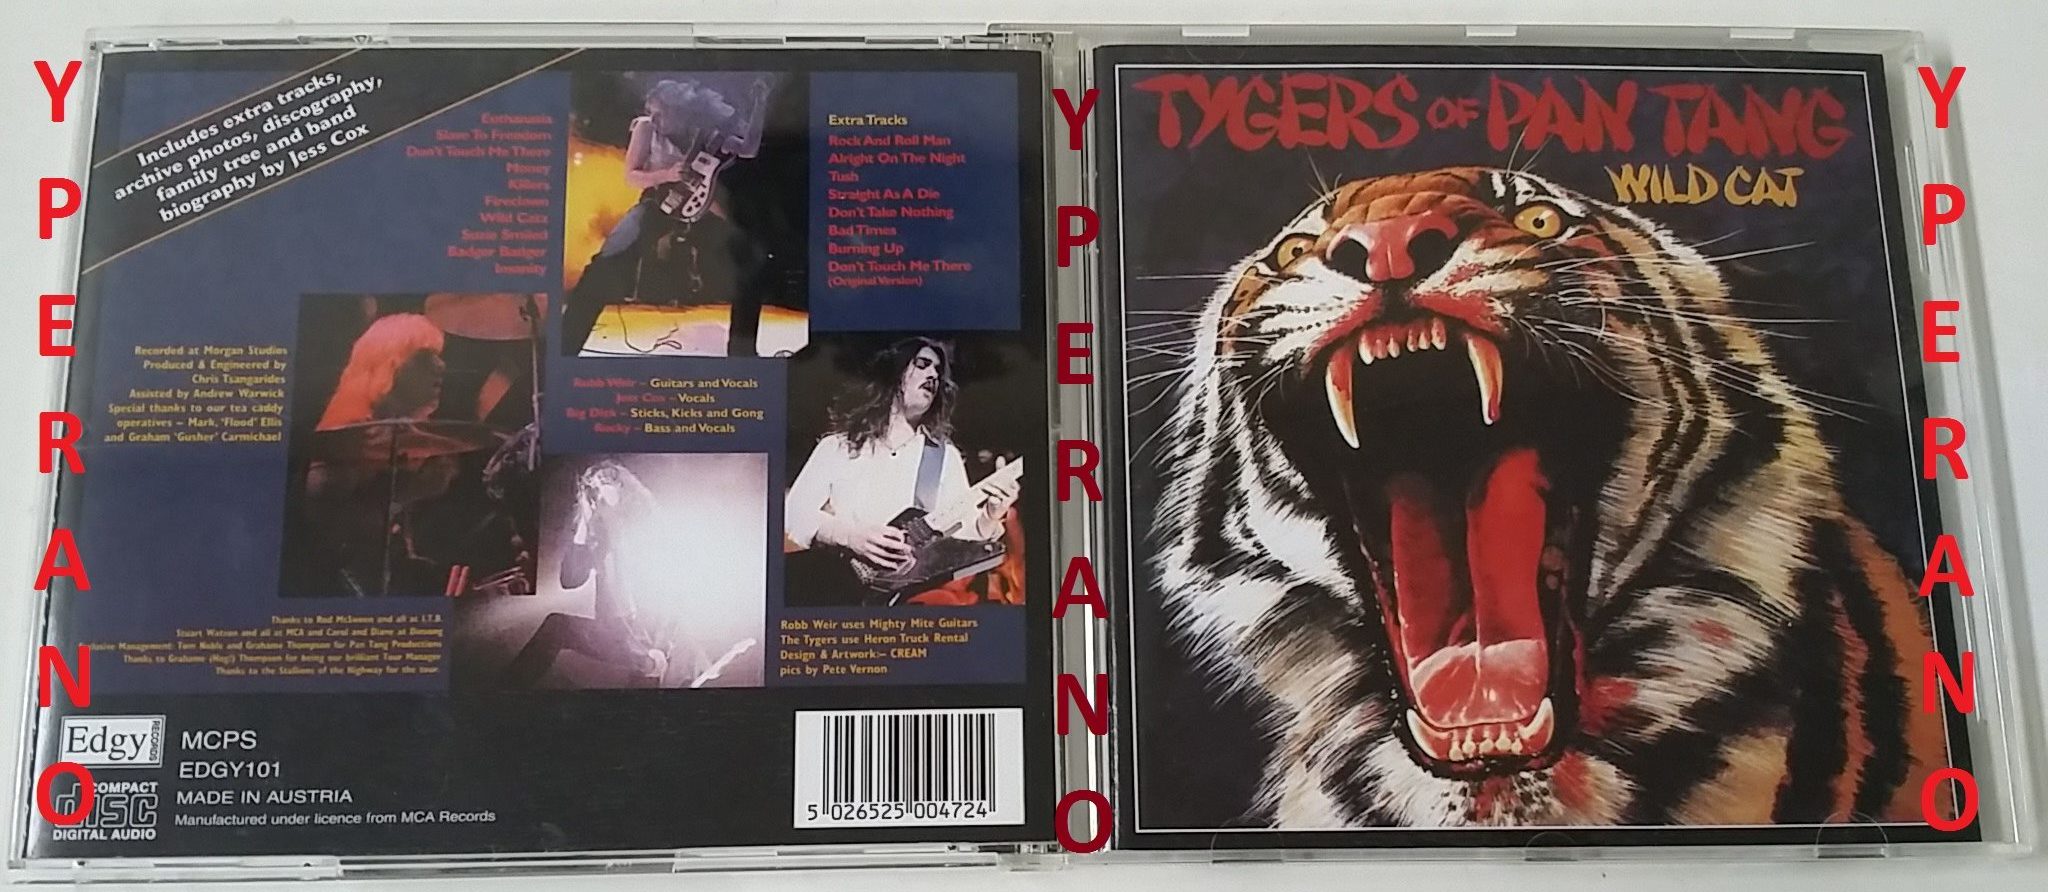 TYGERS OF PAN TANG Wild Cat CD Edgy Records + 8 extra Tracks, photos